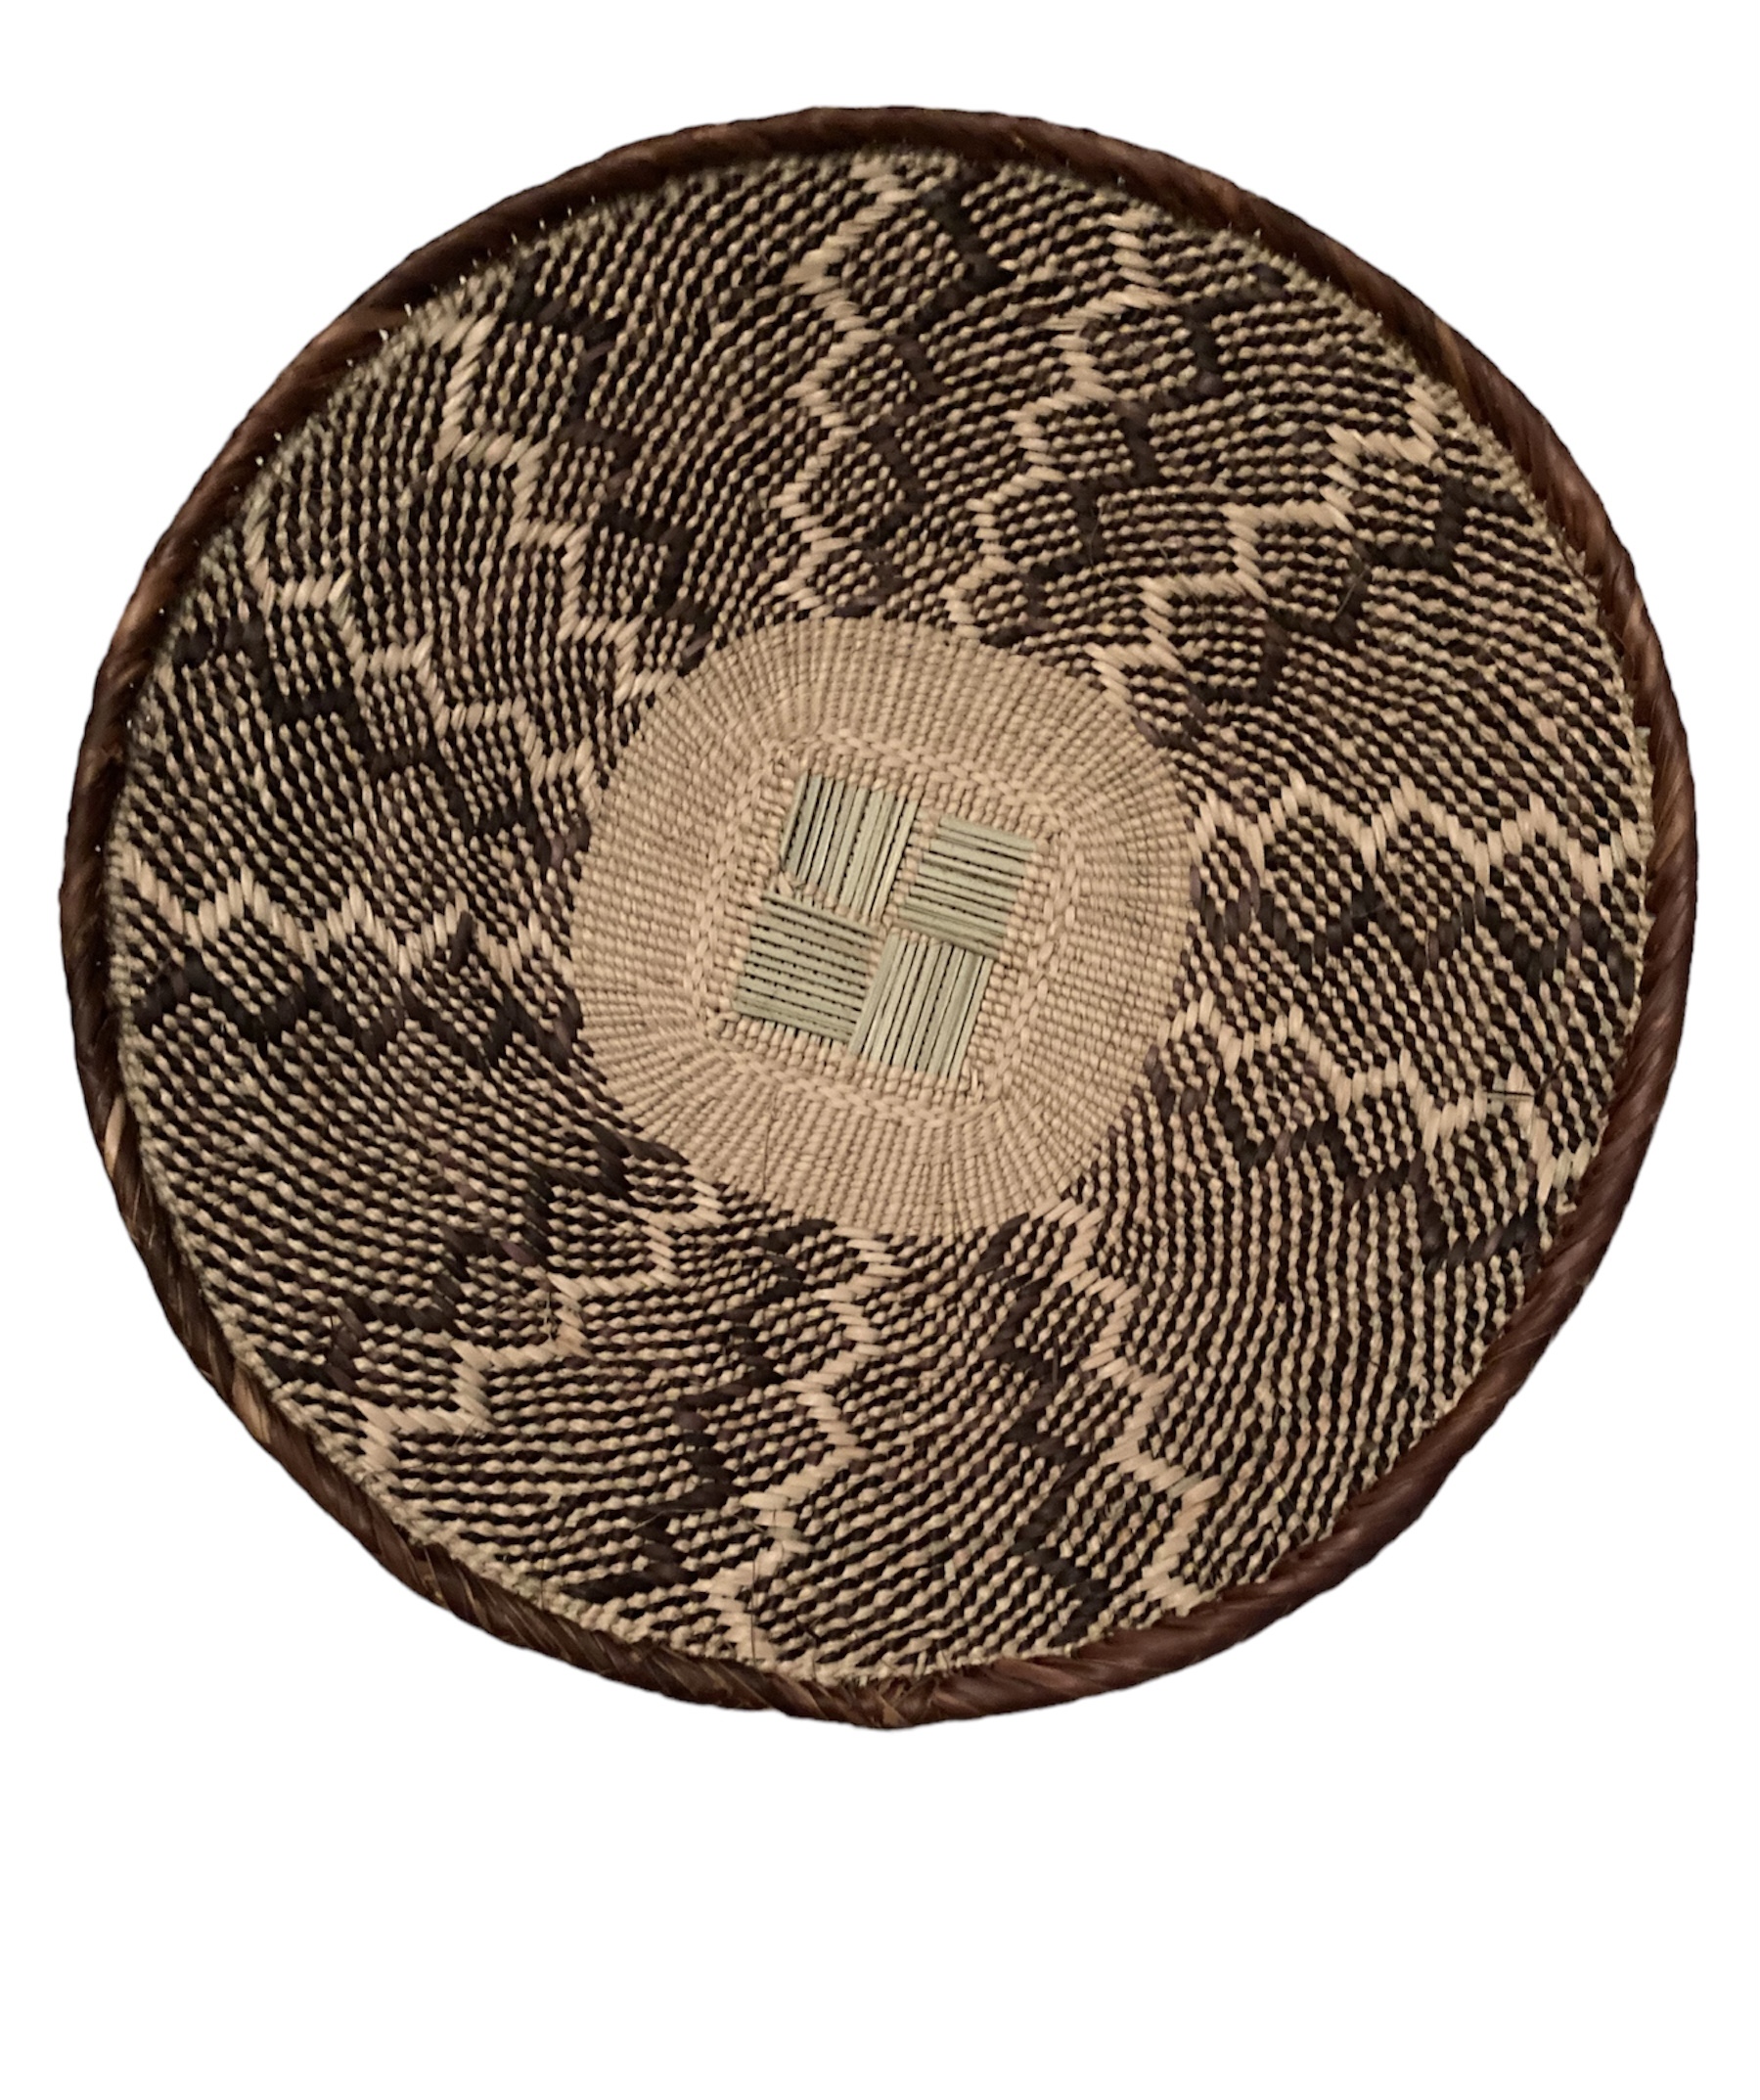 Tonga Basket from Zimbabwe - Design #006 - 15\" dia.